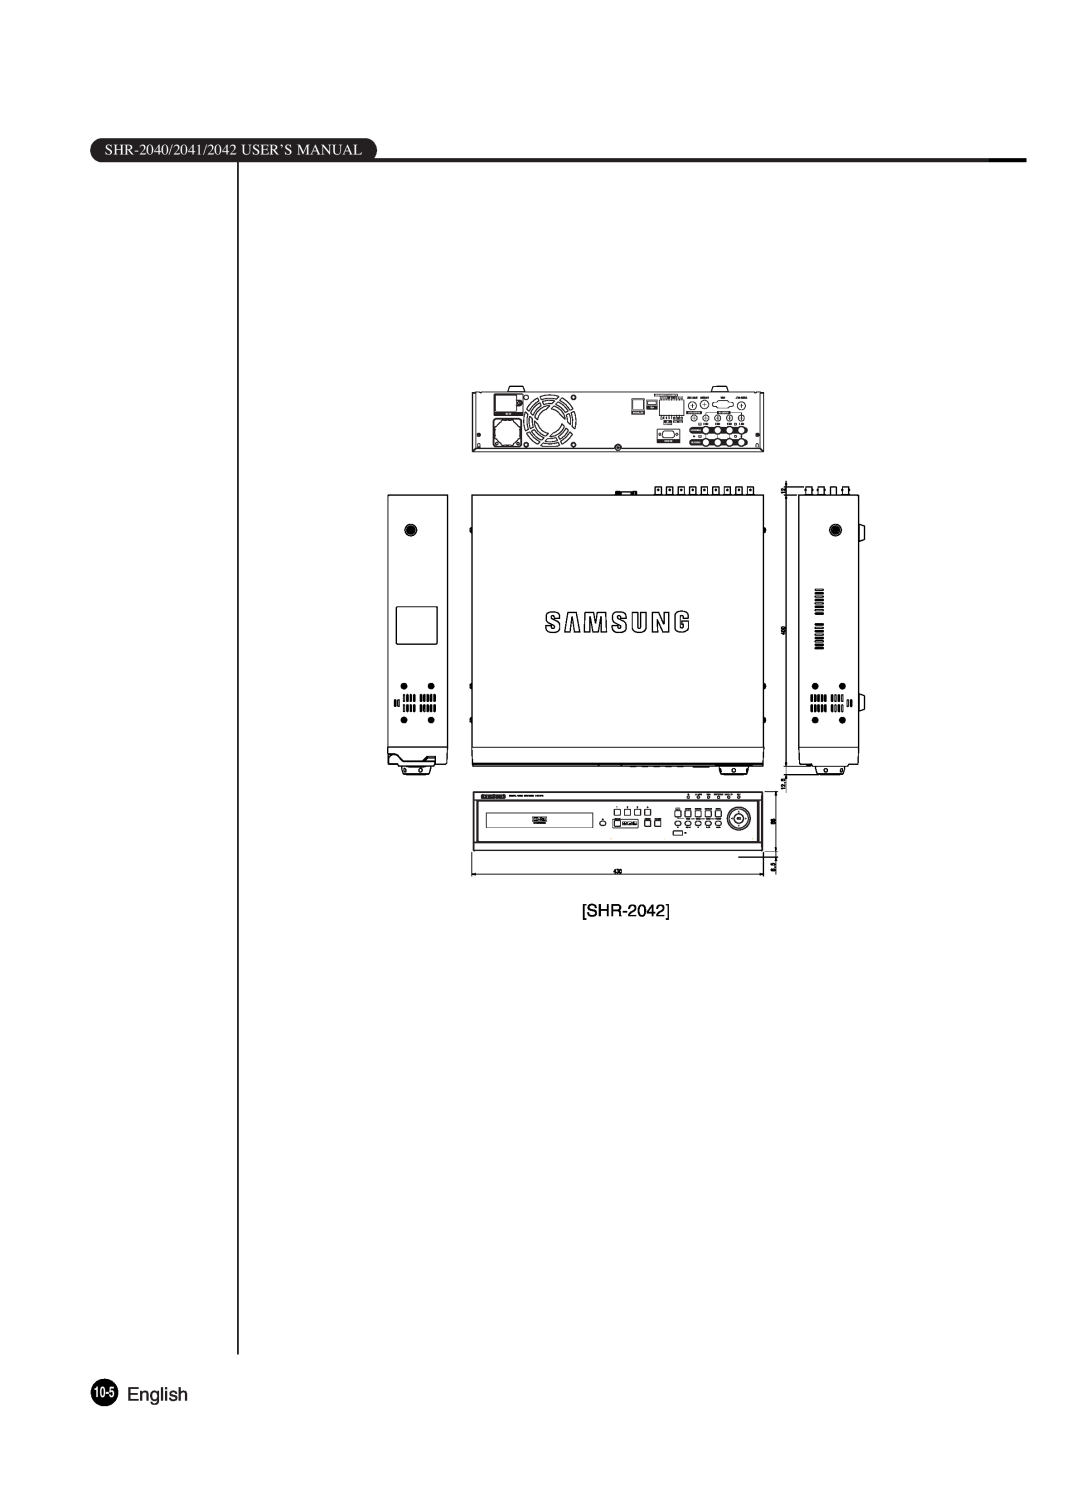 Samsung SHR-2042P250, SHR-2040P250 manual English, SHR-2040/2041/2042 USER’S MANUAL 